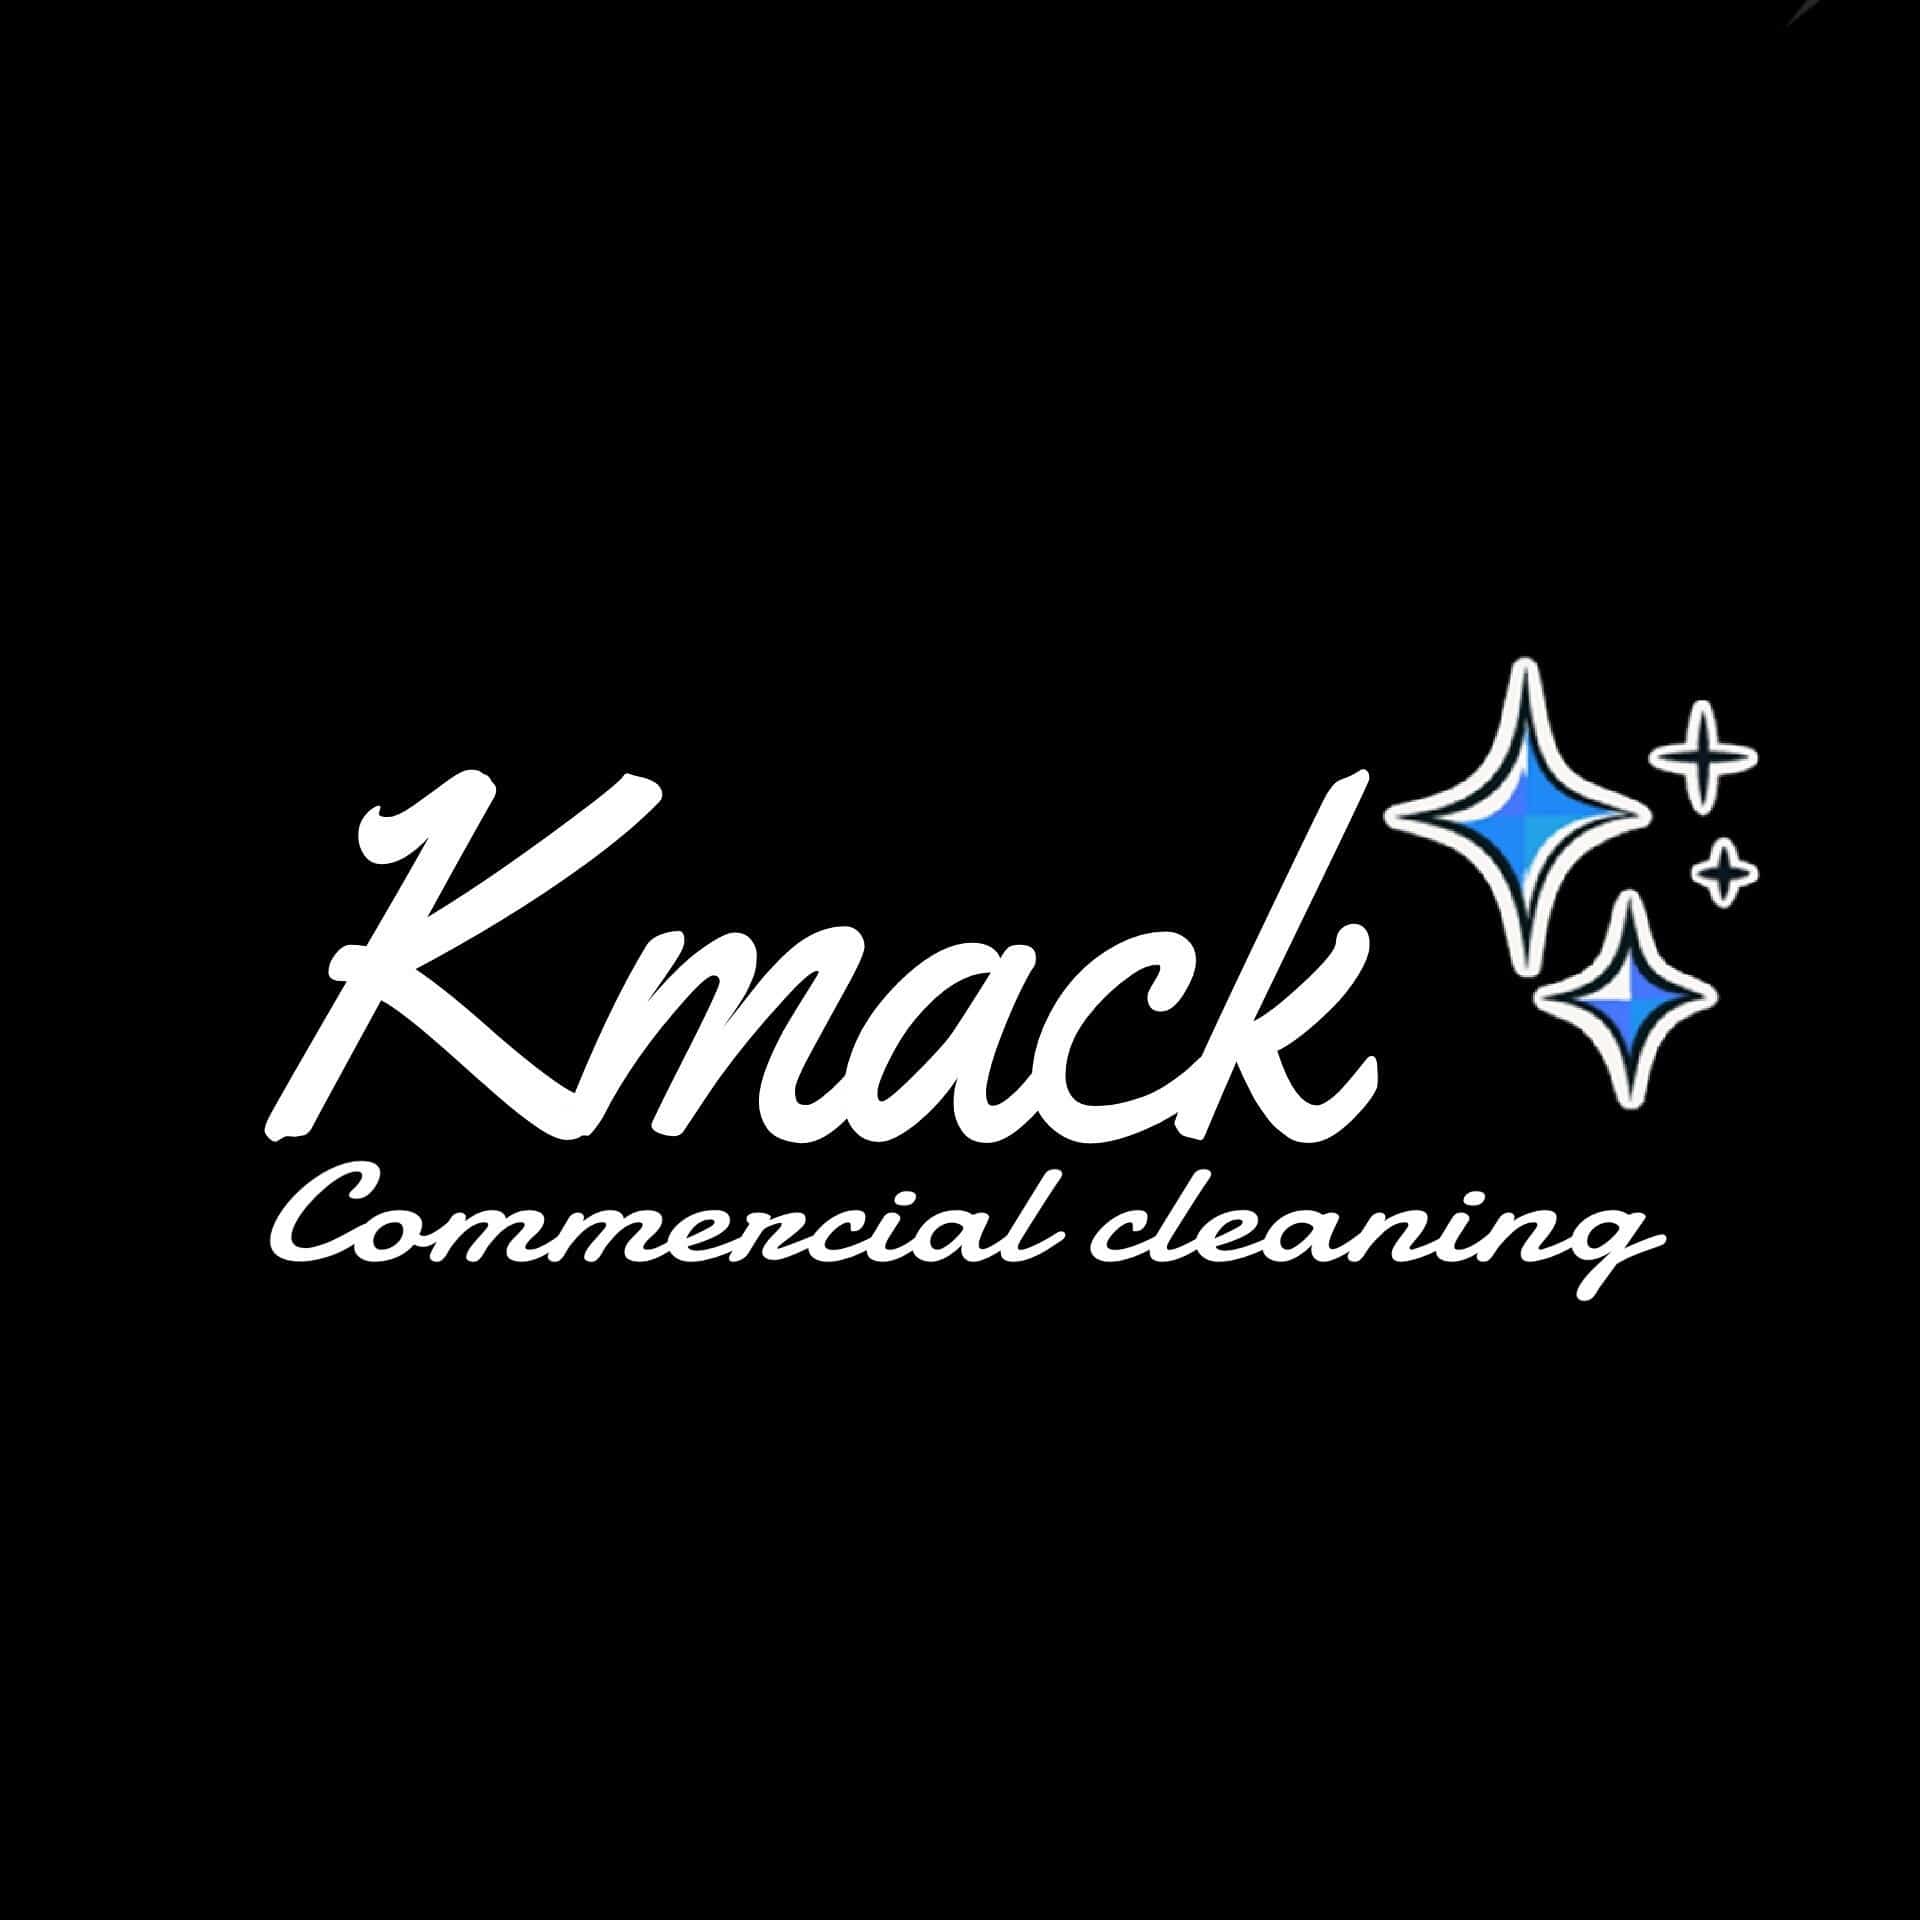 KMACK Commercial, LLC